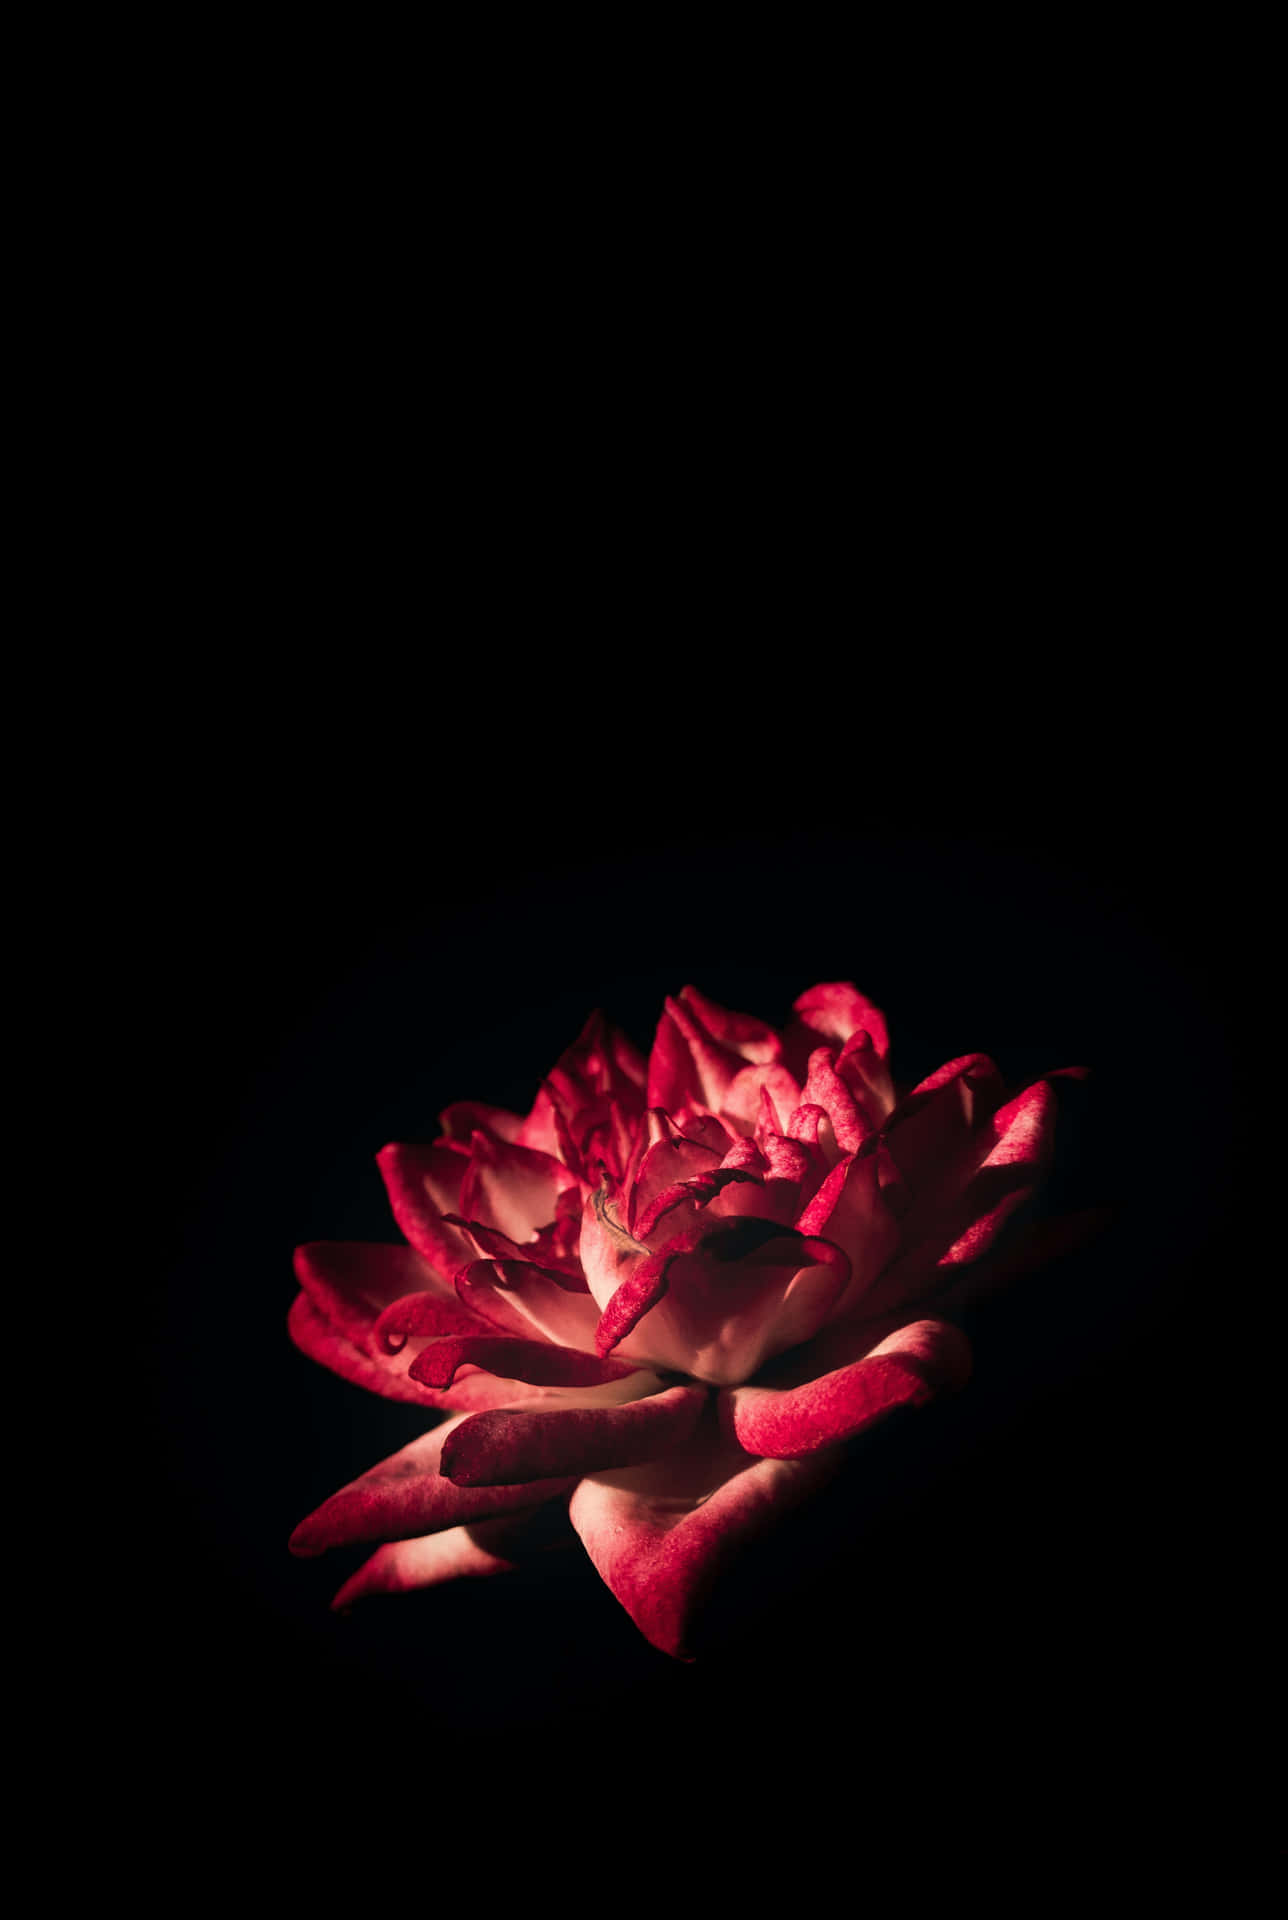 Schwarzesund Pinkes Iphone Rose Blume Wallpaper